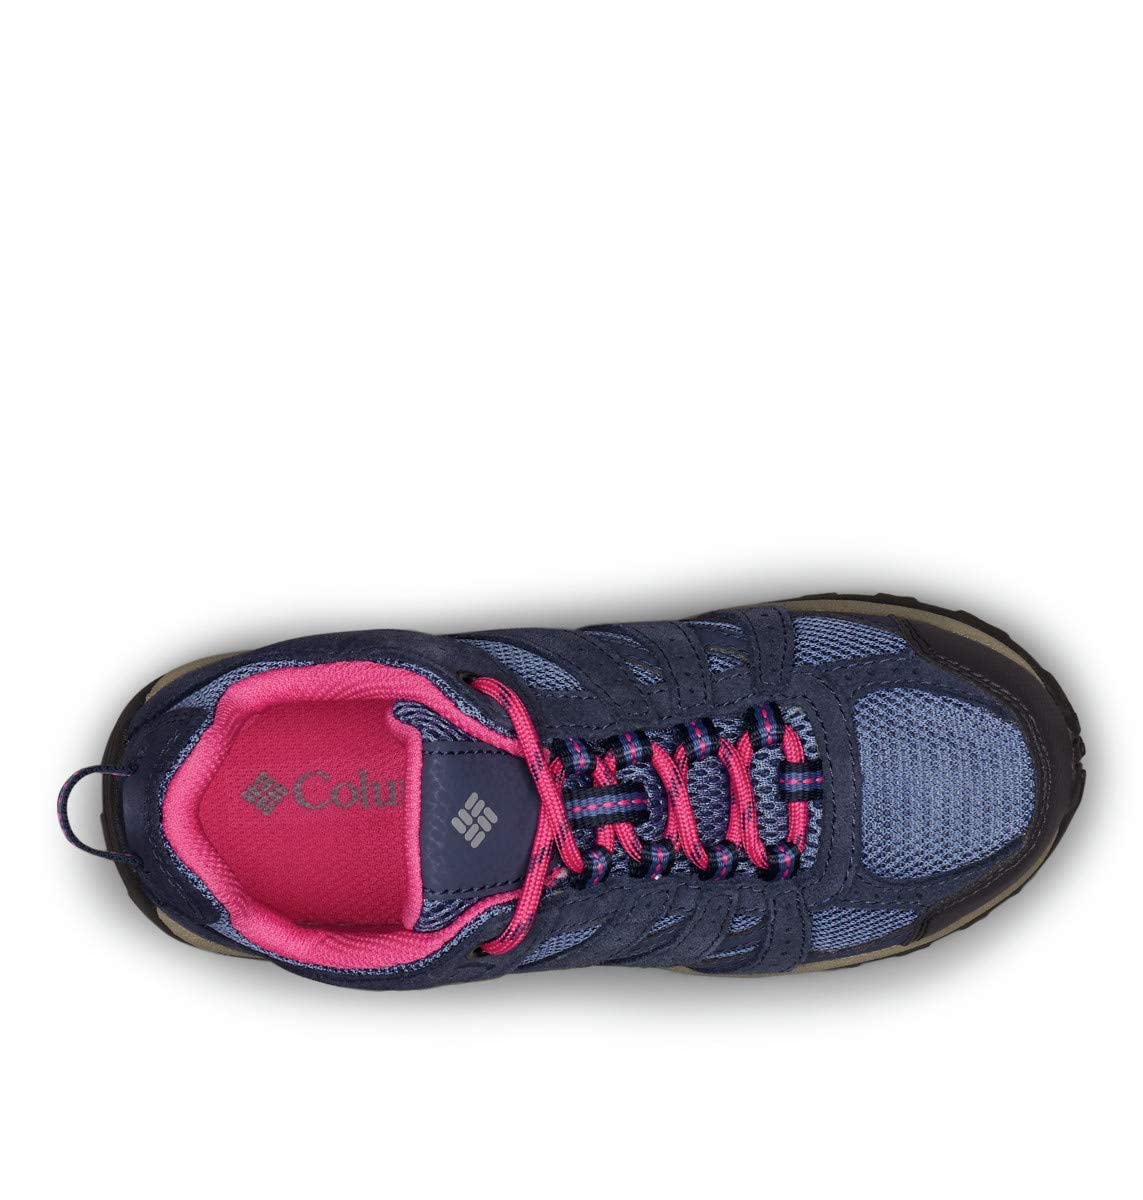 Columbia Unisex-Child Redmond Waterproof Hiking Shoe